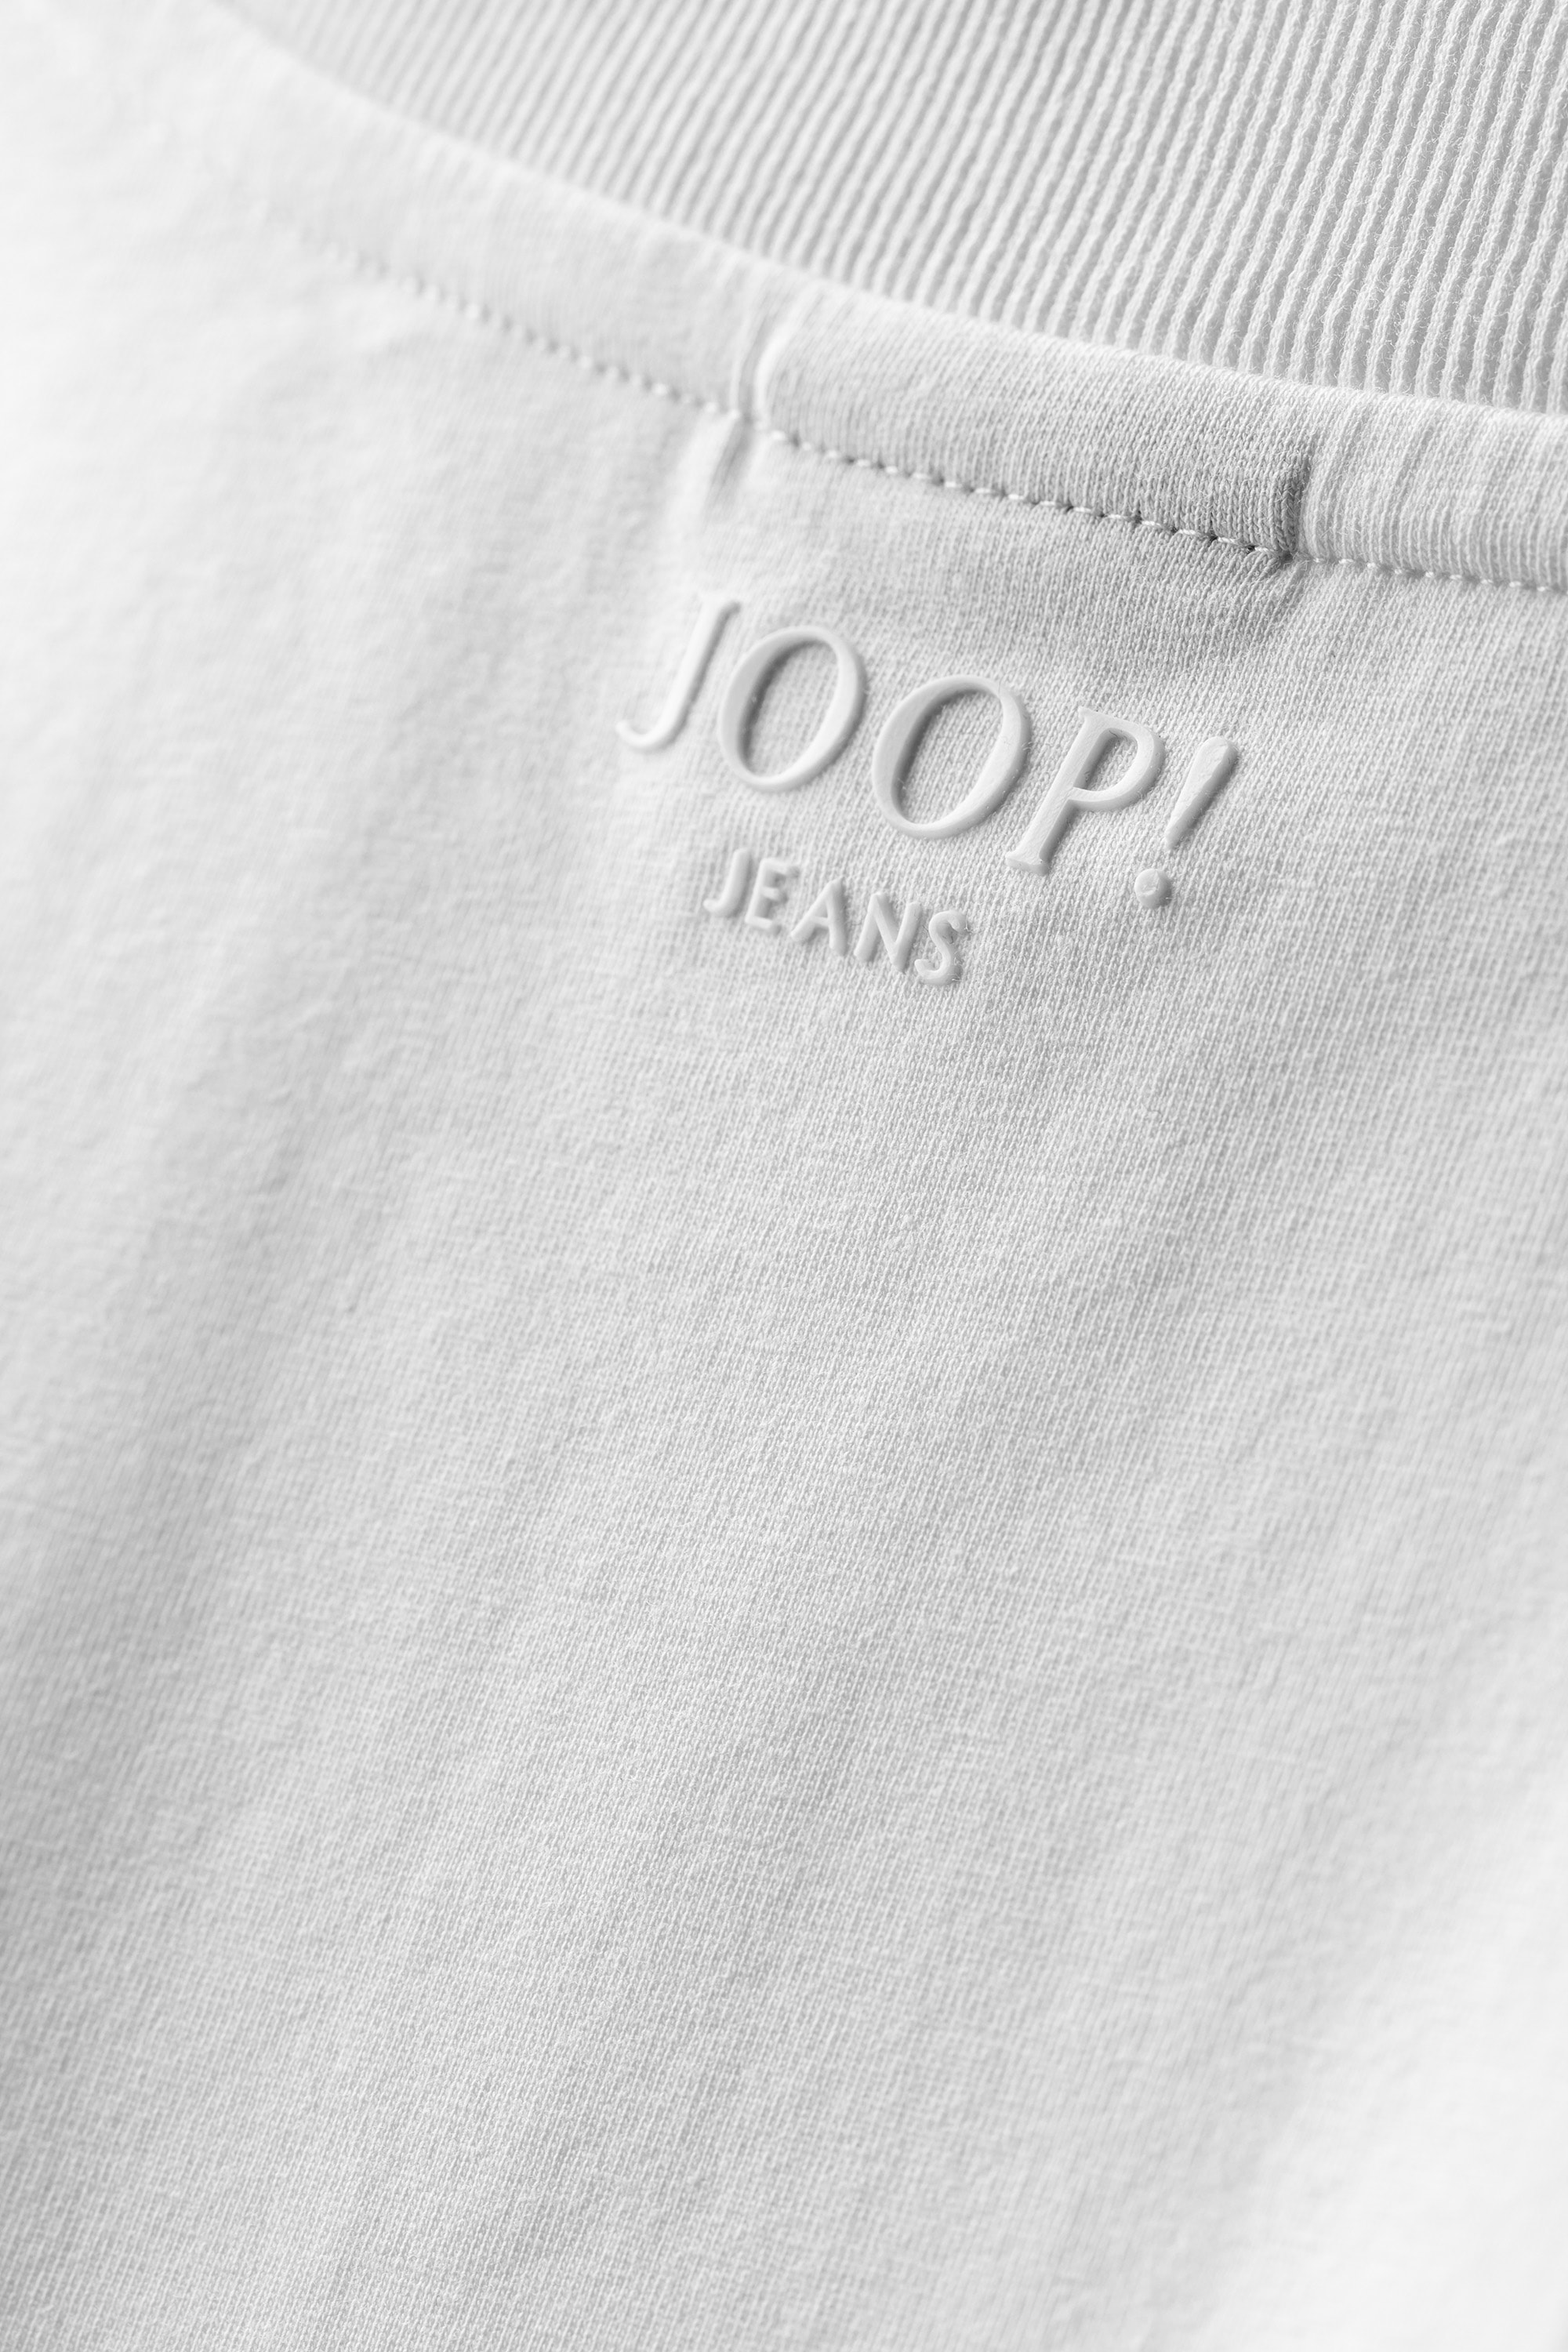 Joop Jeans T-Shirt »Cedric«, mit Rundhalsausschnitt